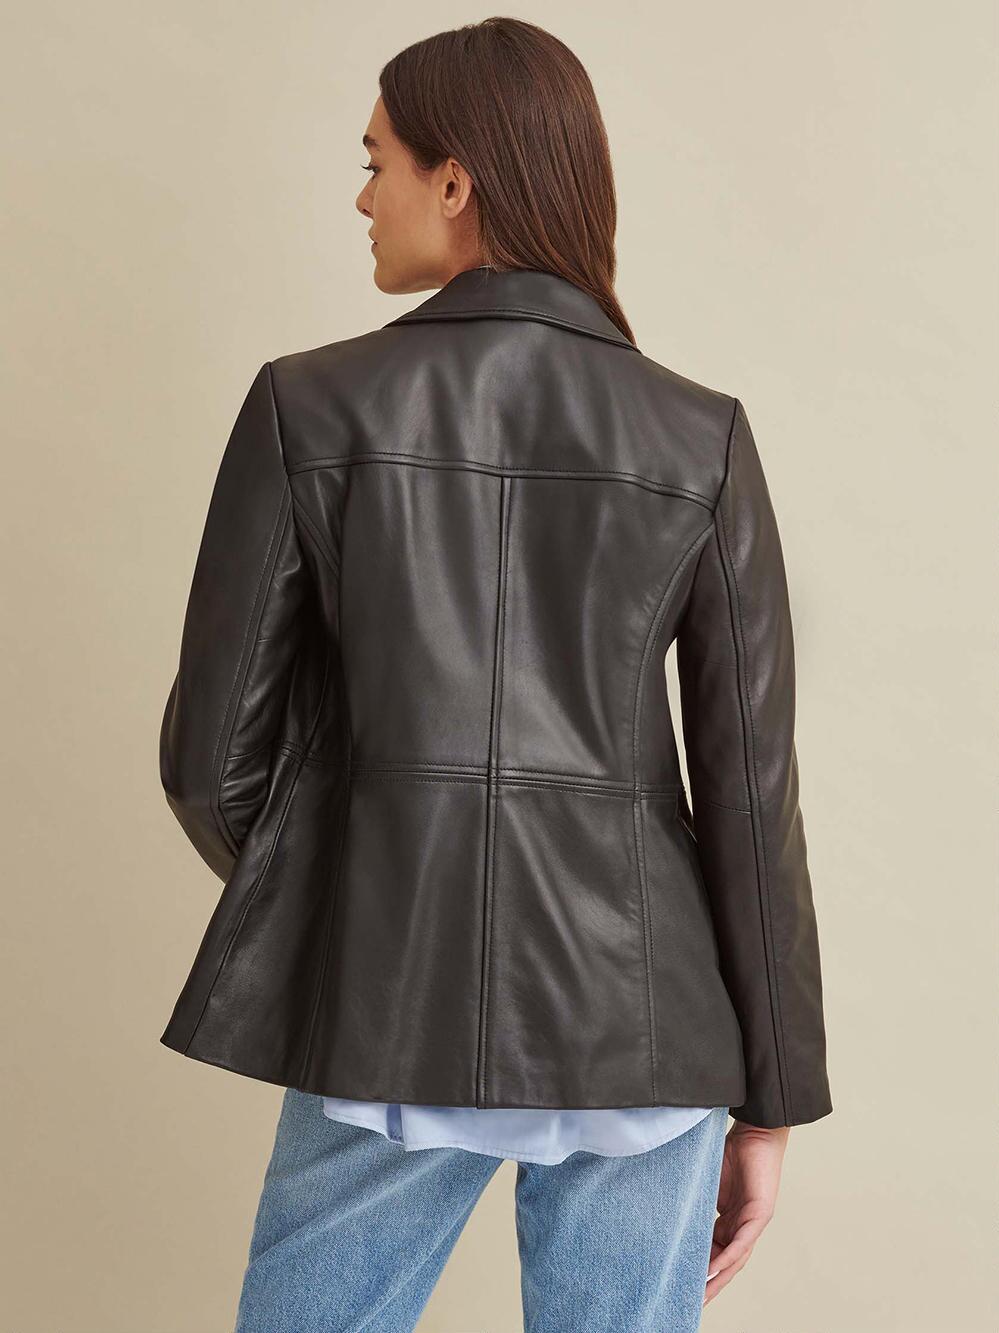 Black Leather Coat Australia